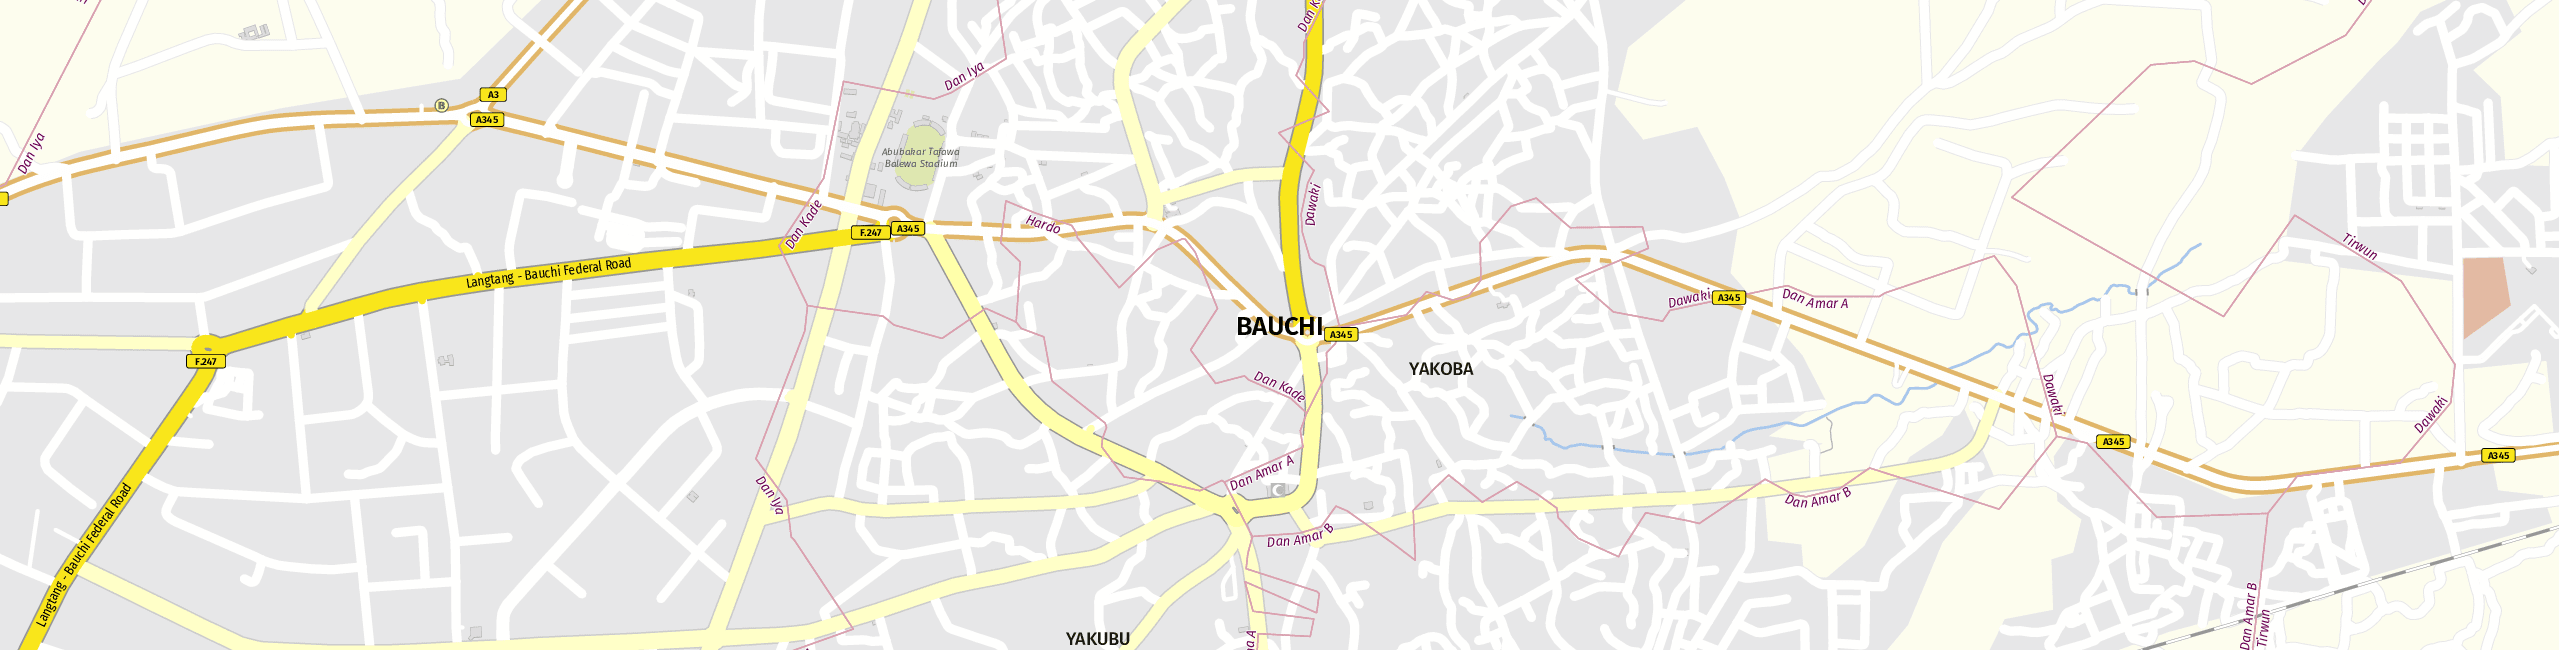 Stadtplan Bauchi zum Downloaden.